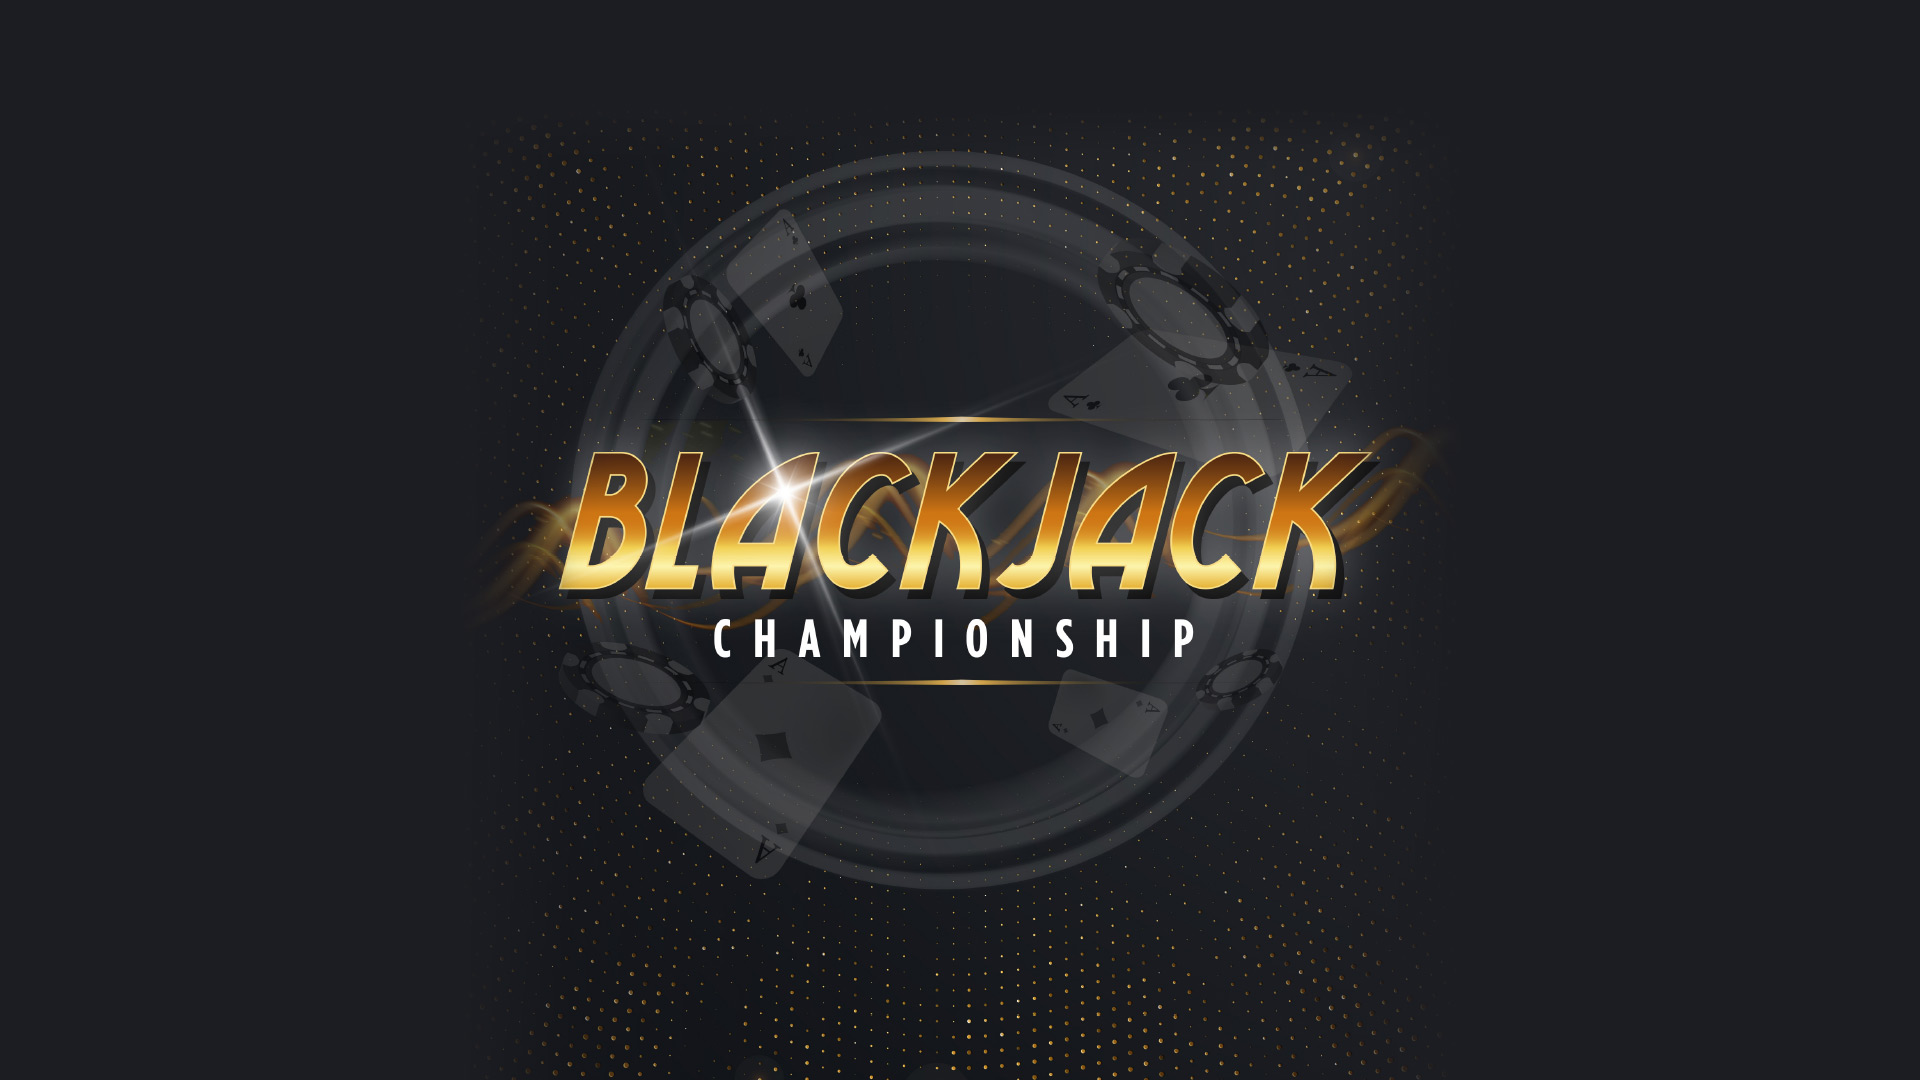 Blackjack offline